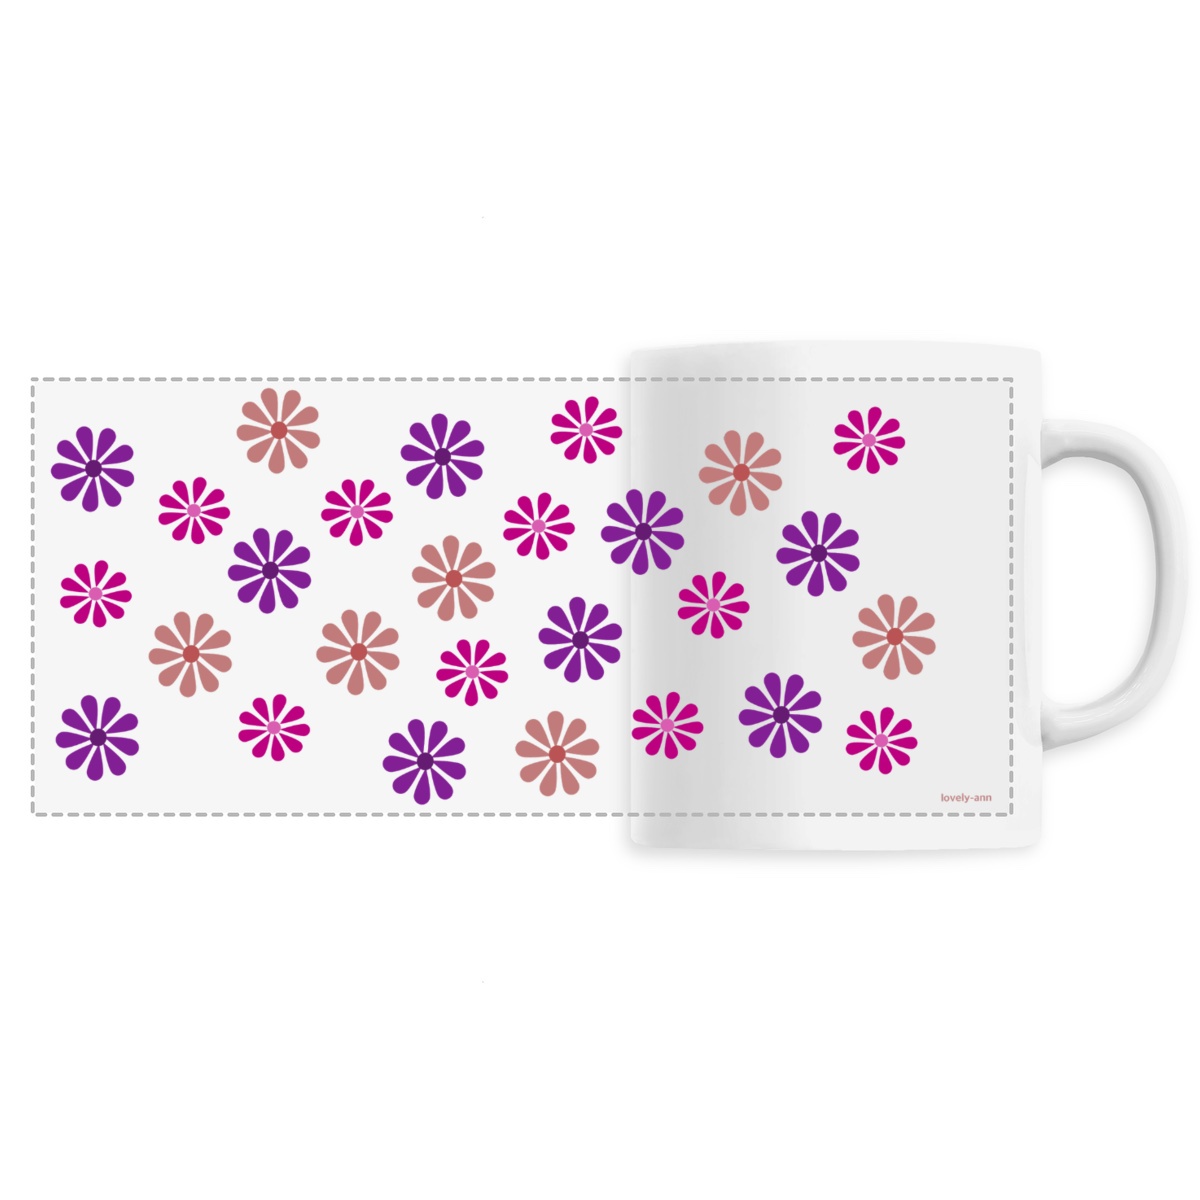 The Modern Purple Shades Star Flowers on a Ceramic Mug